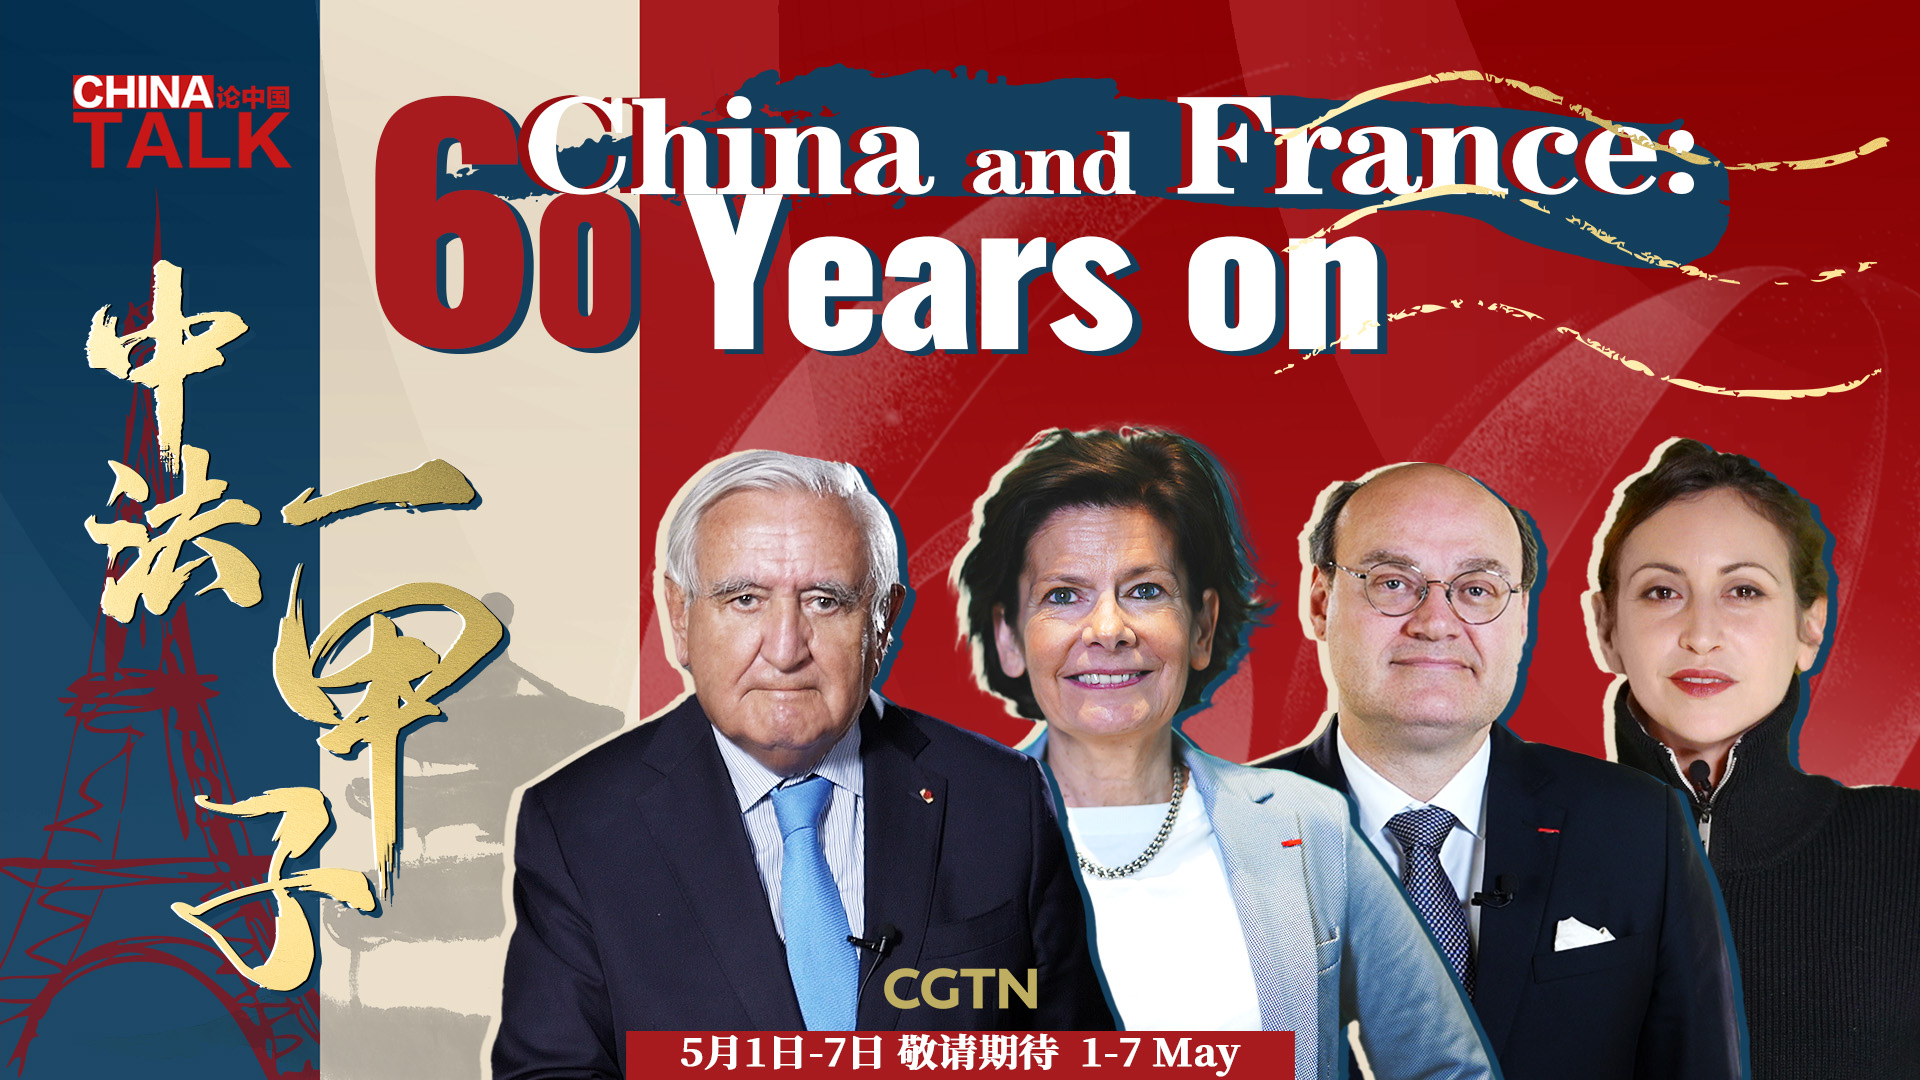 China Talk | China and France: 60 Years on